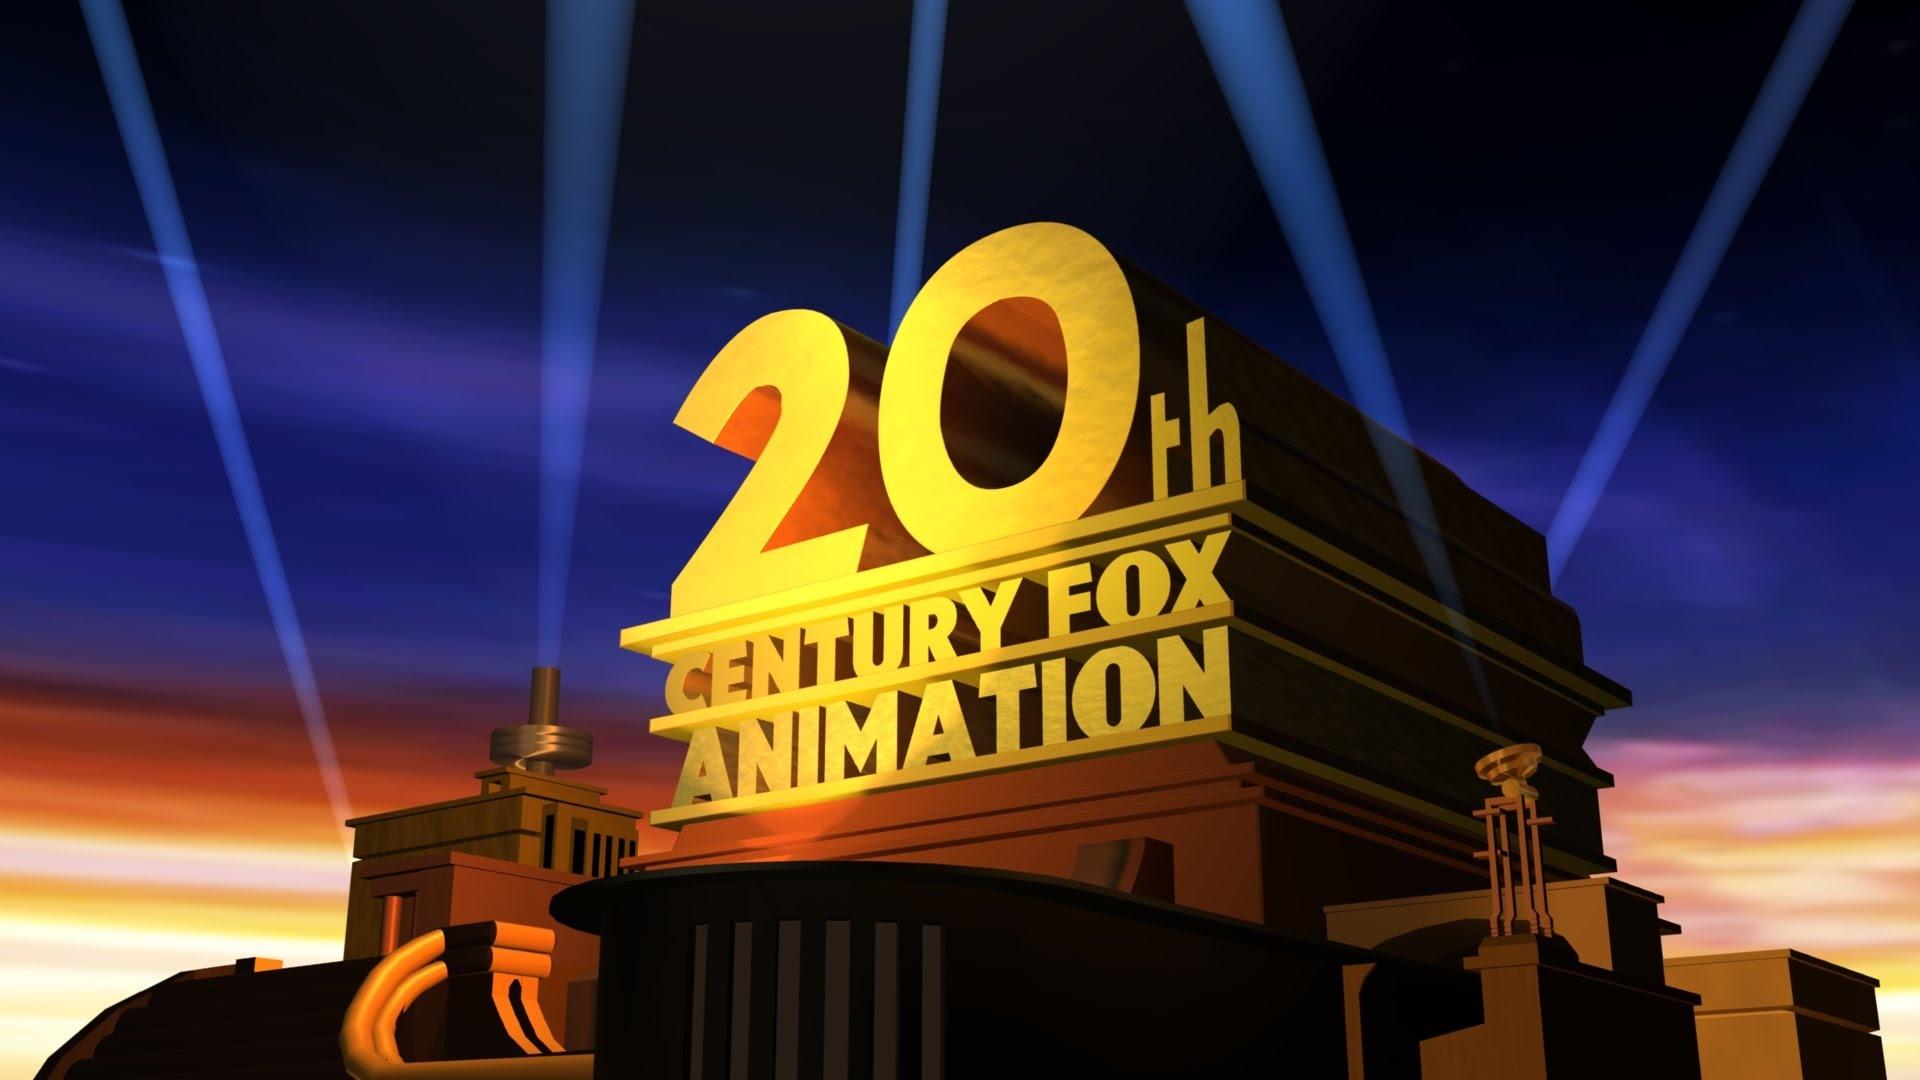 20Th Century Fox Download Hd - Colaboratory